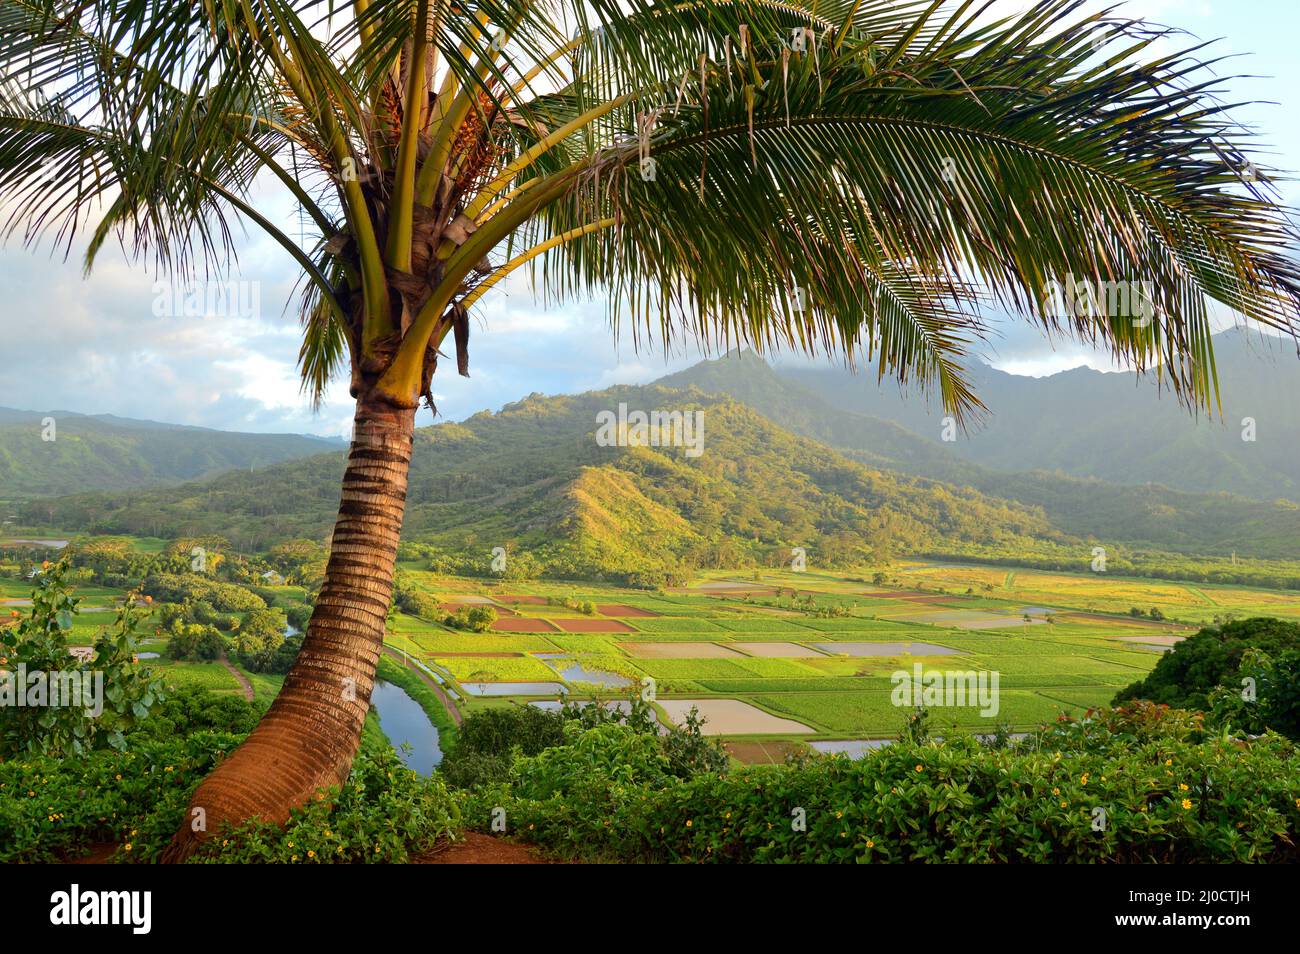 A palm tree frames the fertile taro fields in Kauai, Hawaii Stock Photo